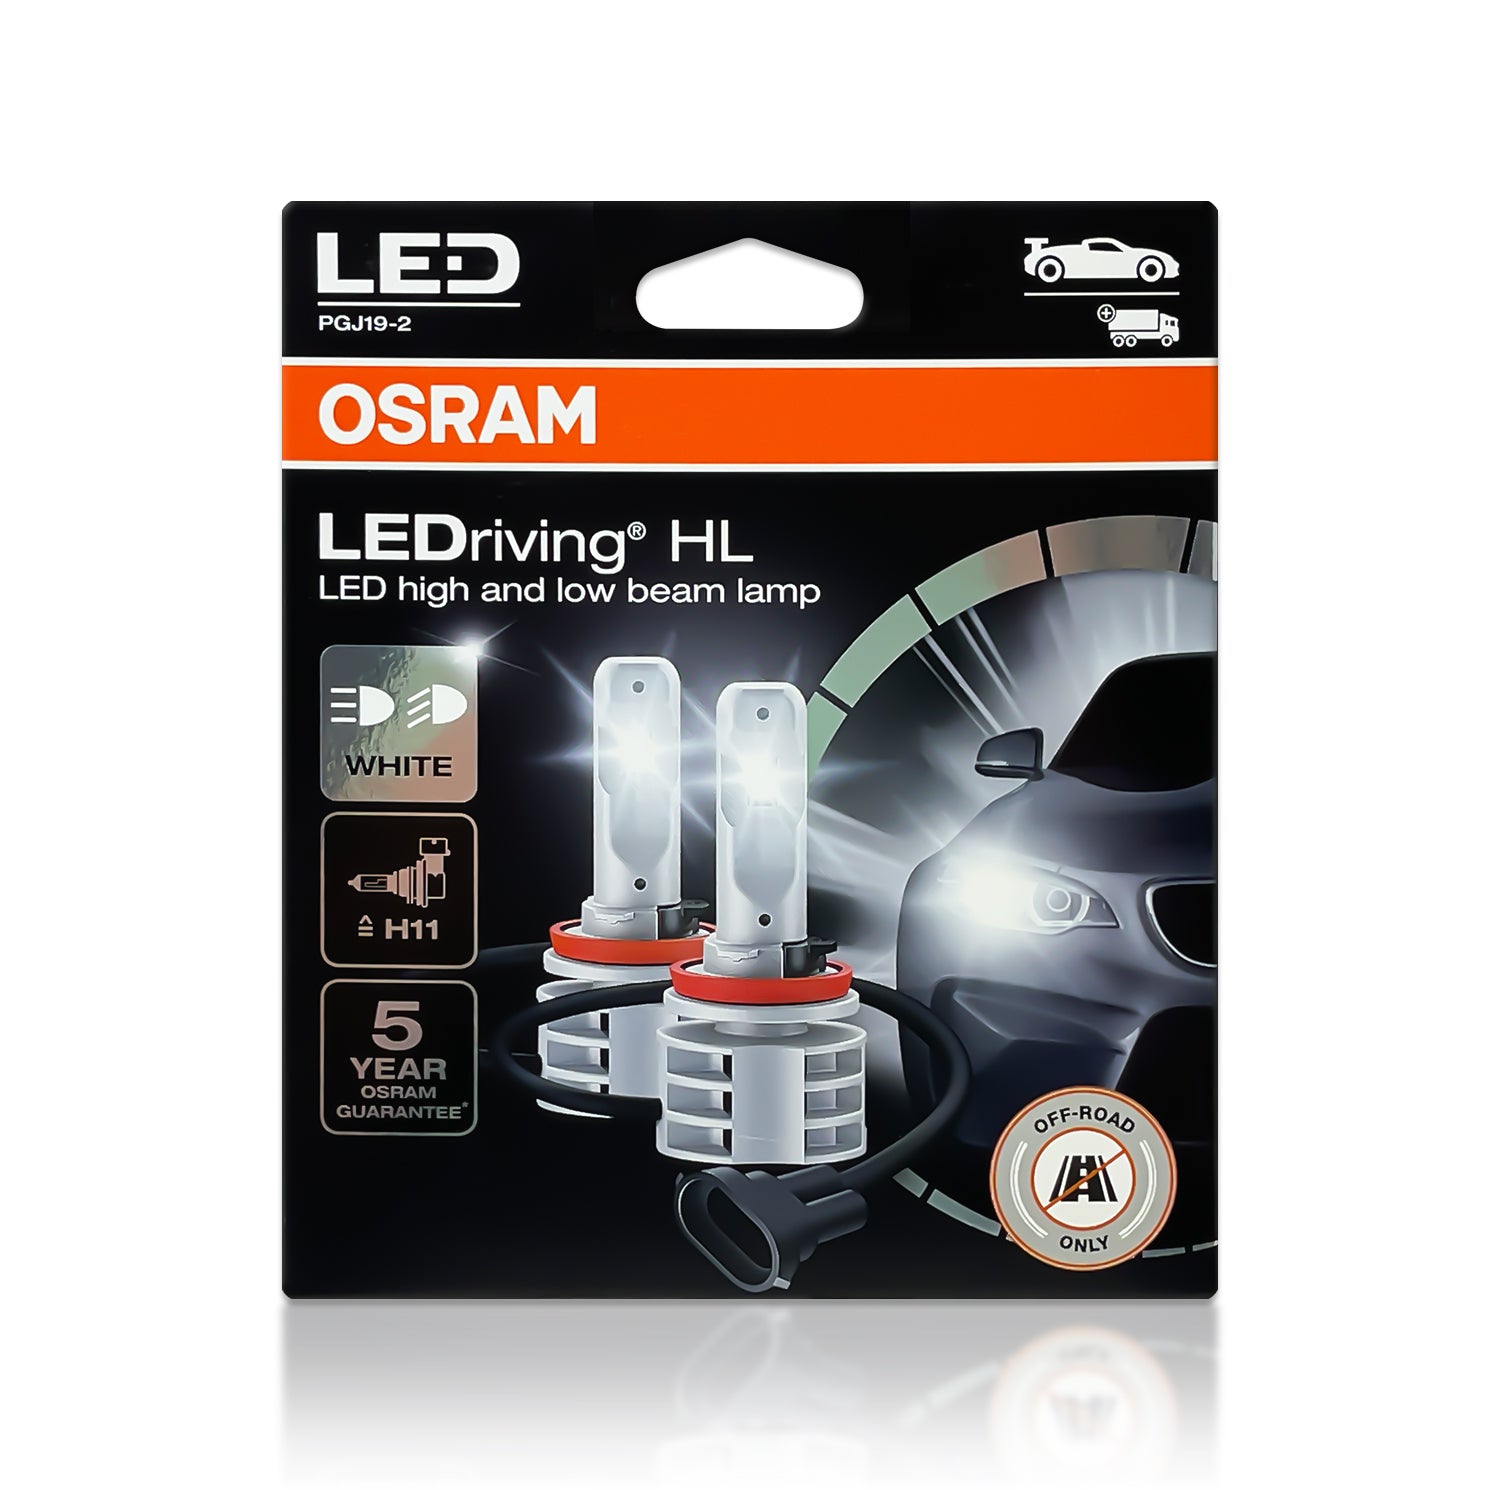 OSRAM LED lamps